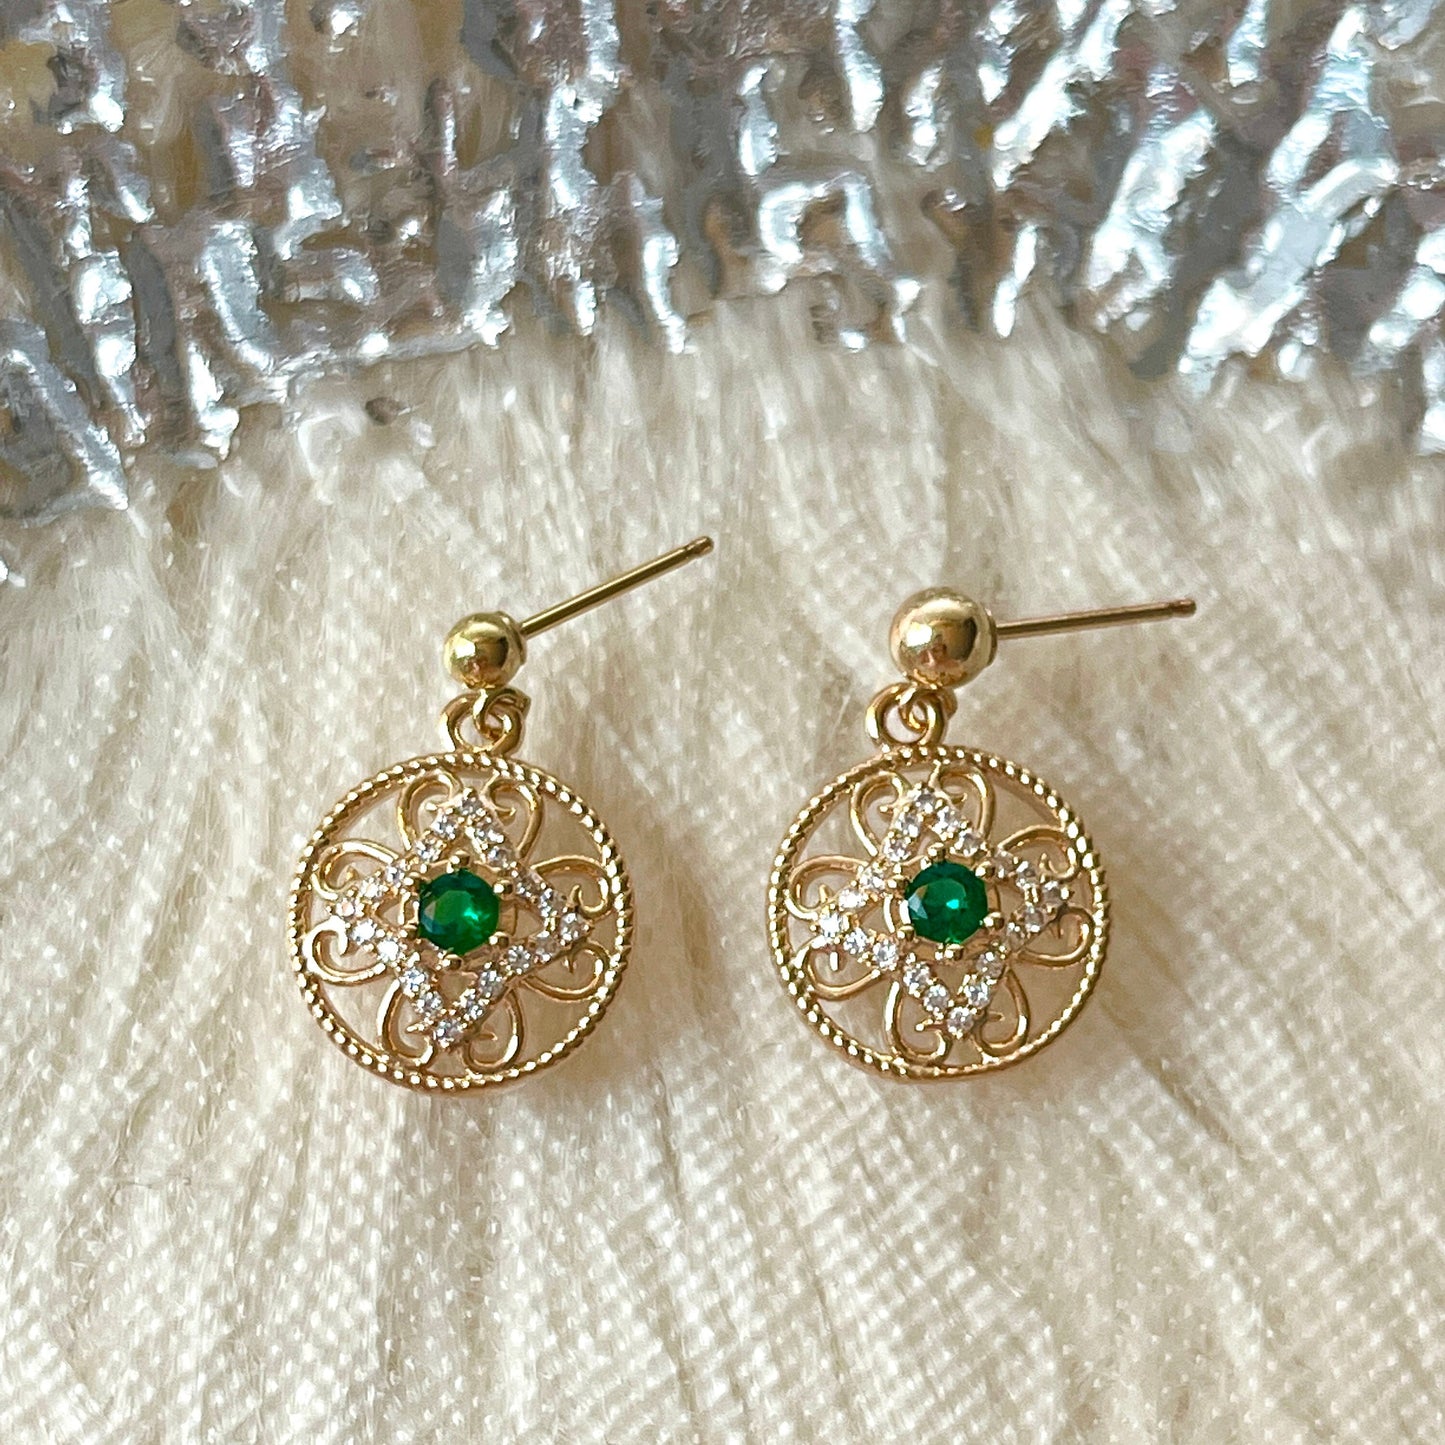 Emerald Green Earrings, 14K Gold Lace Earrings, Vintage Style Dangle, Infinity Earrings, Round Hoop Earrings, Delicate Wedding Birthday Gift